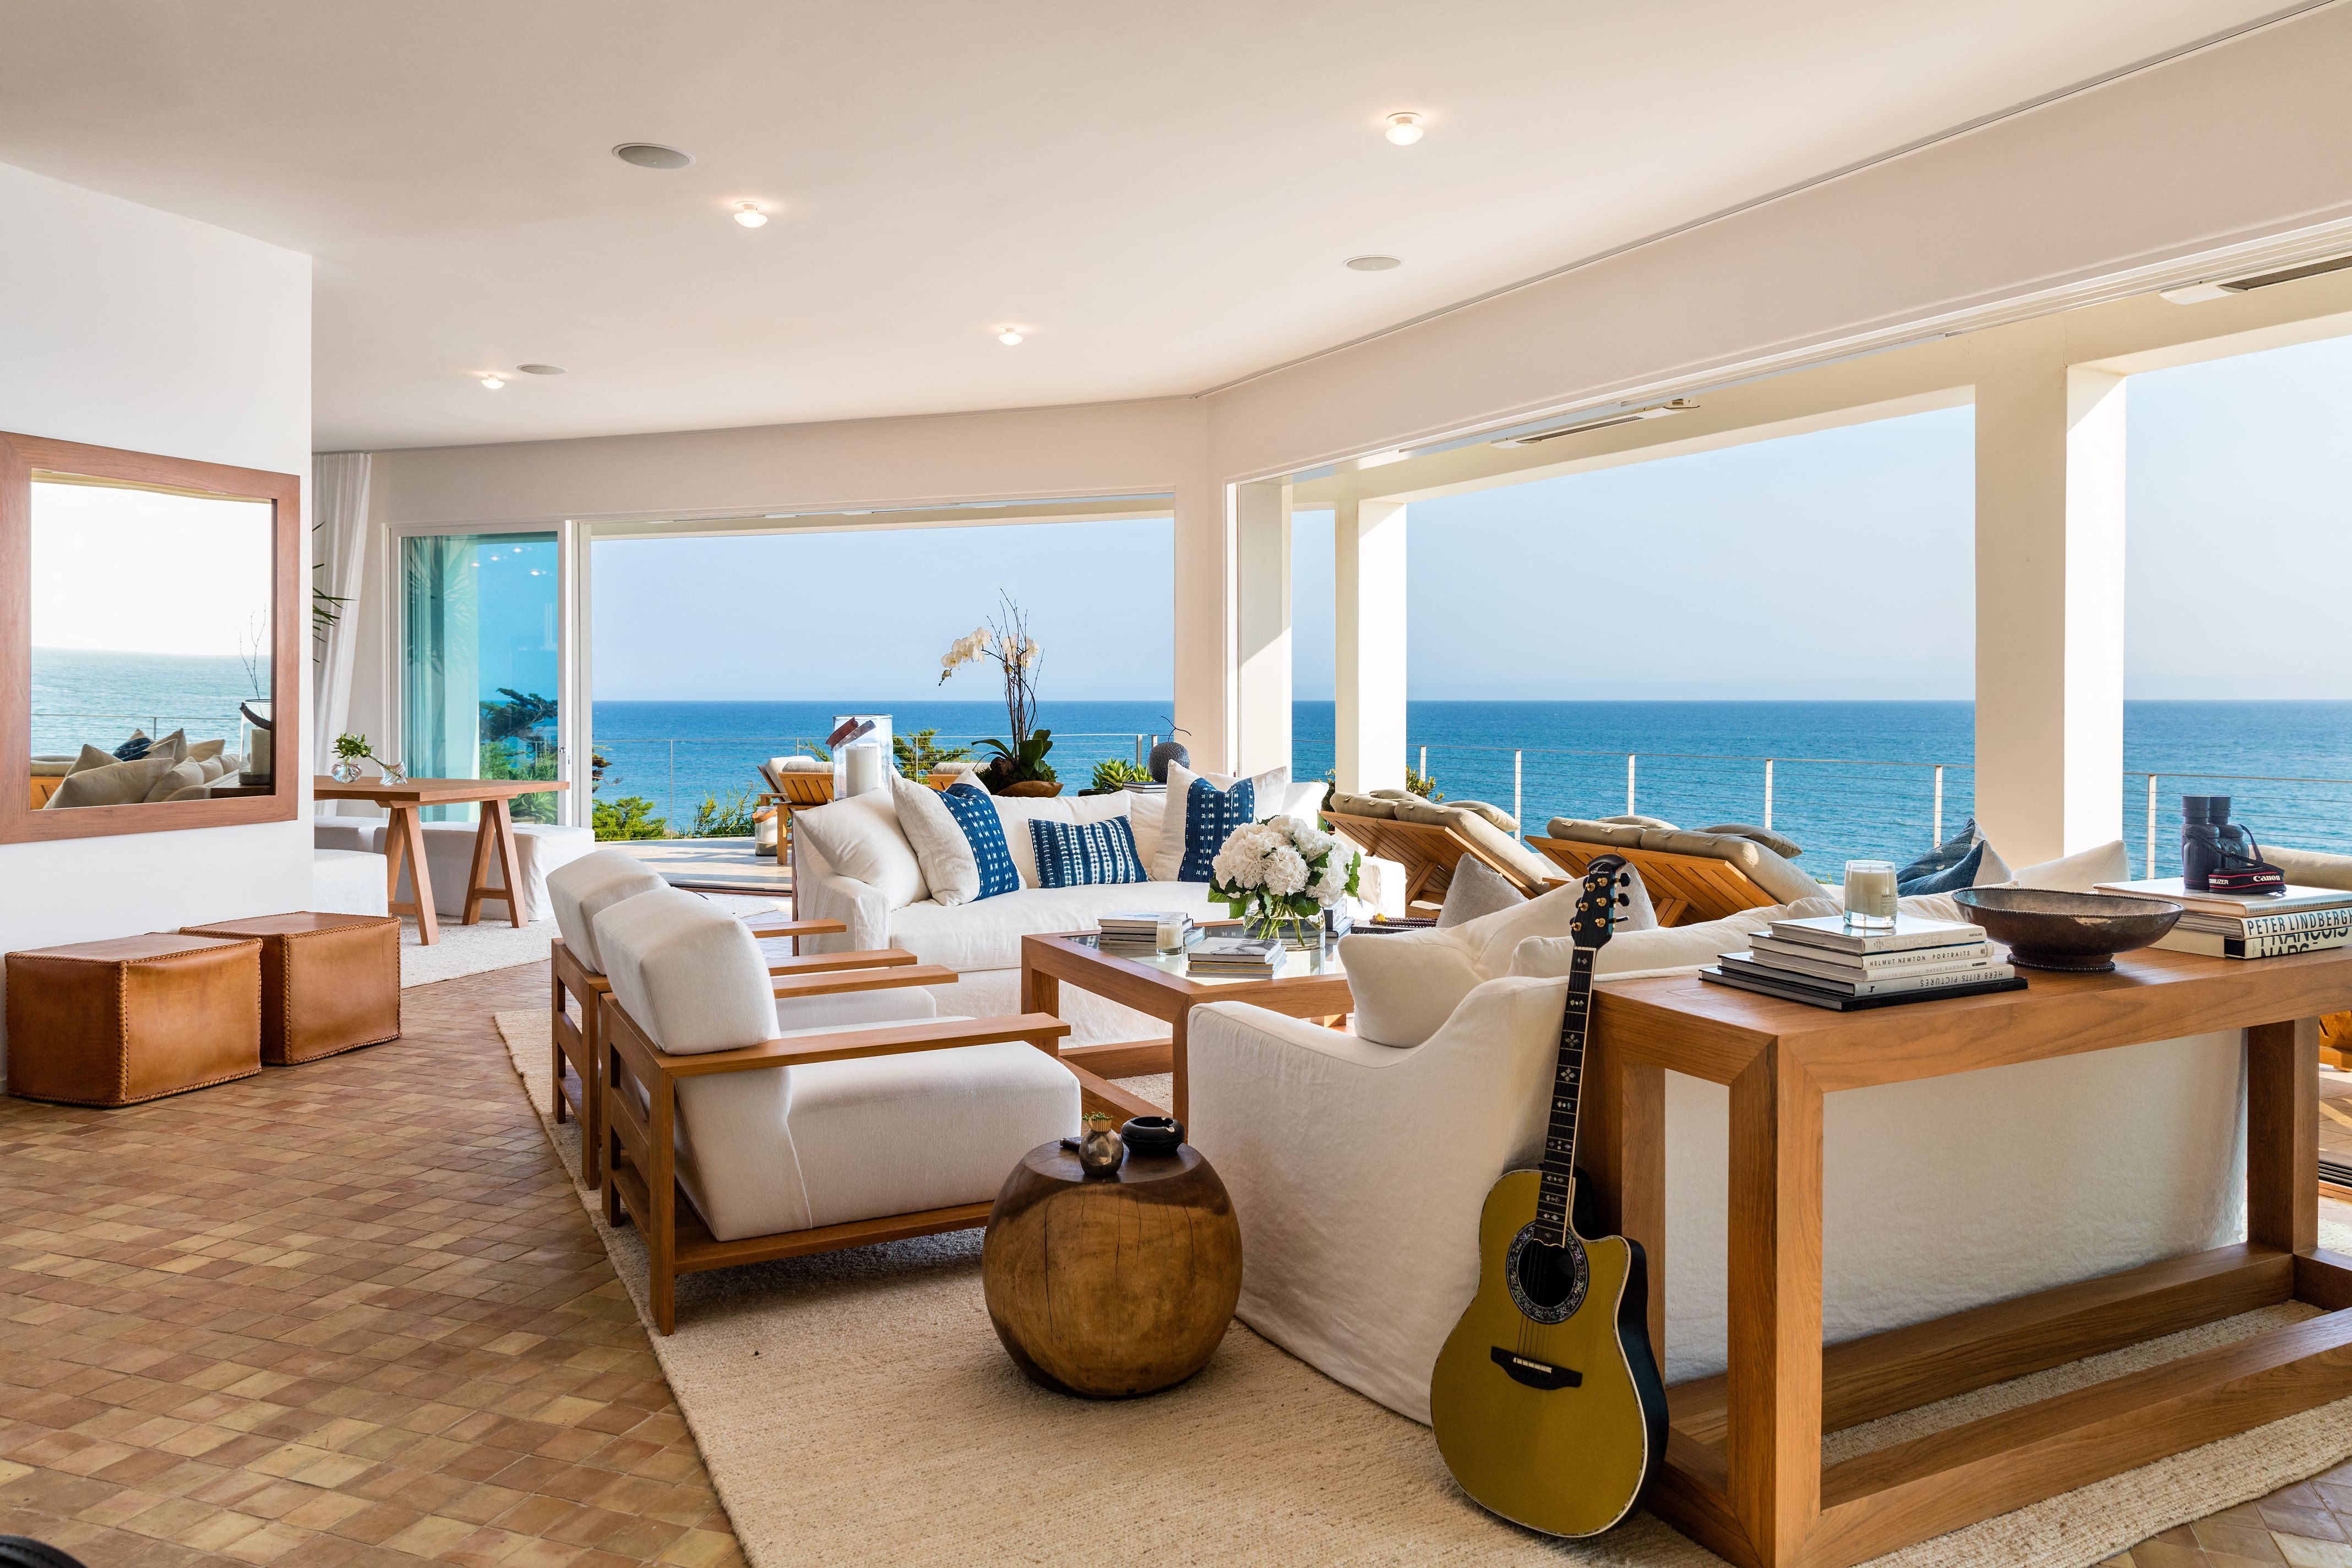 Kim Kardashian Purchases $70 Million Secluded Malibu Beach House: All the Details